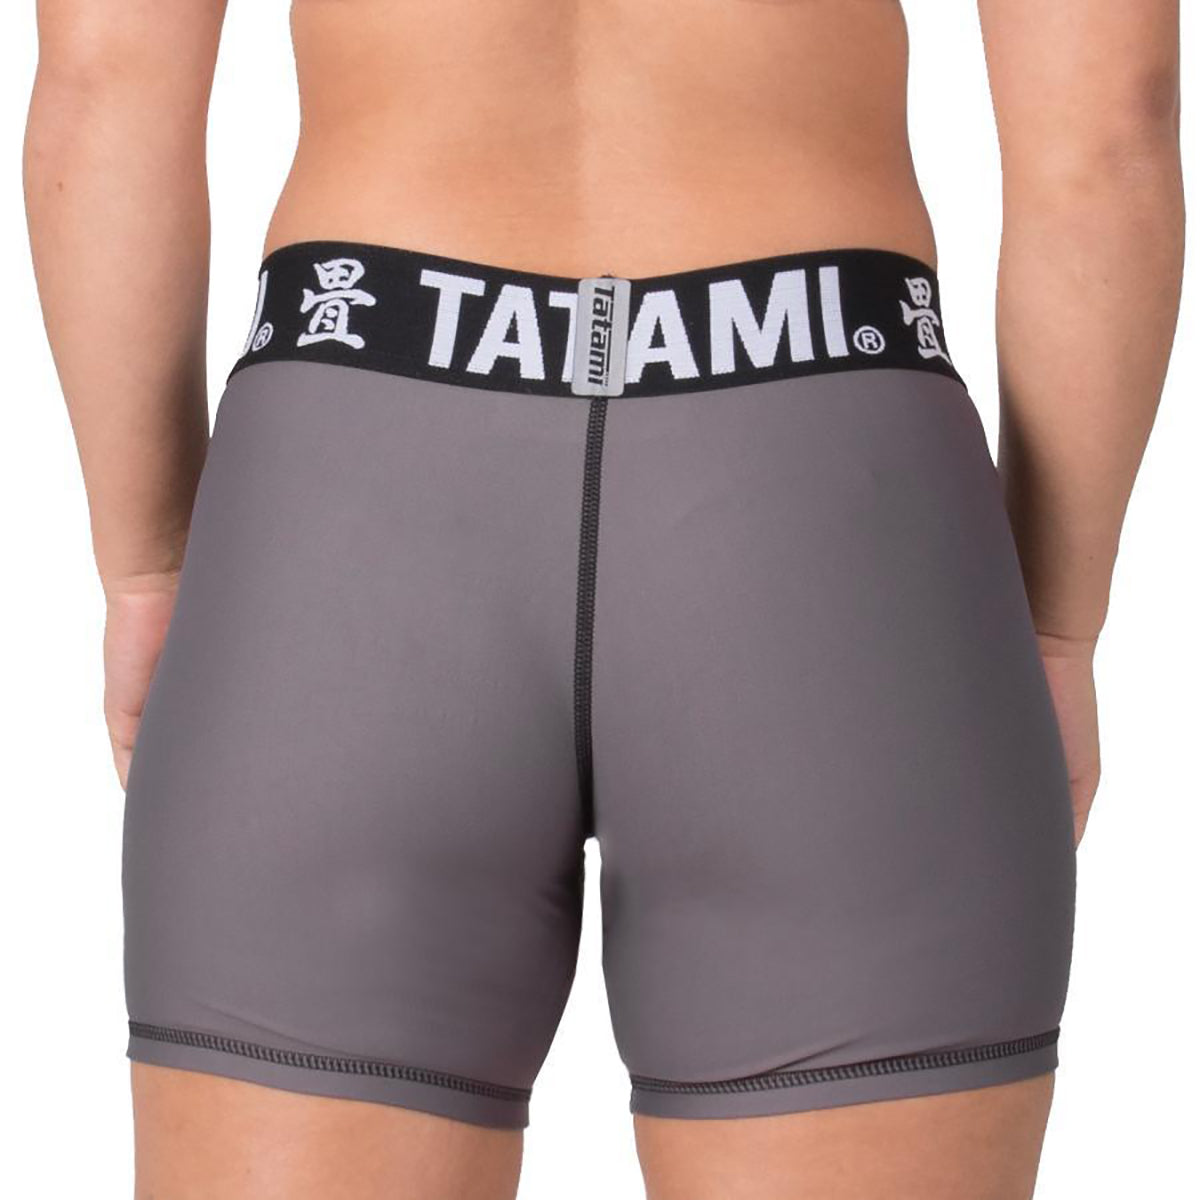 Tatami Fightwear Women's Minimal Vale Tudo Shorts Tatami Fightwear